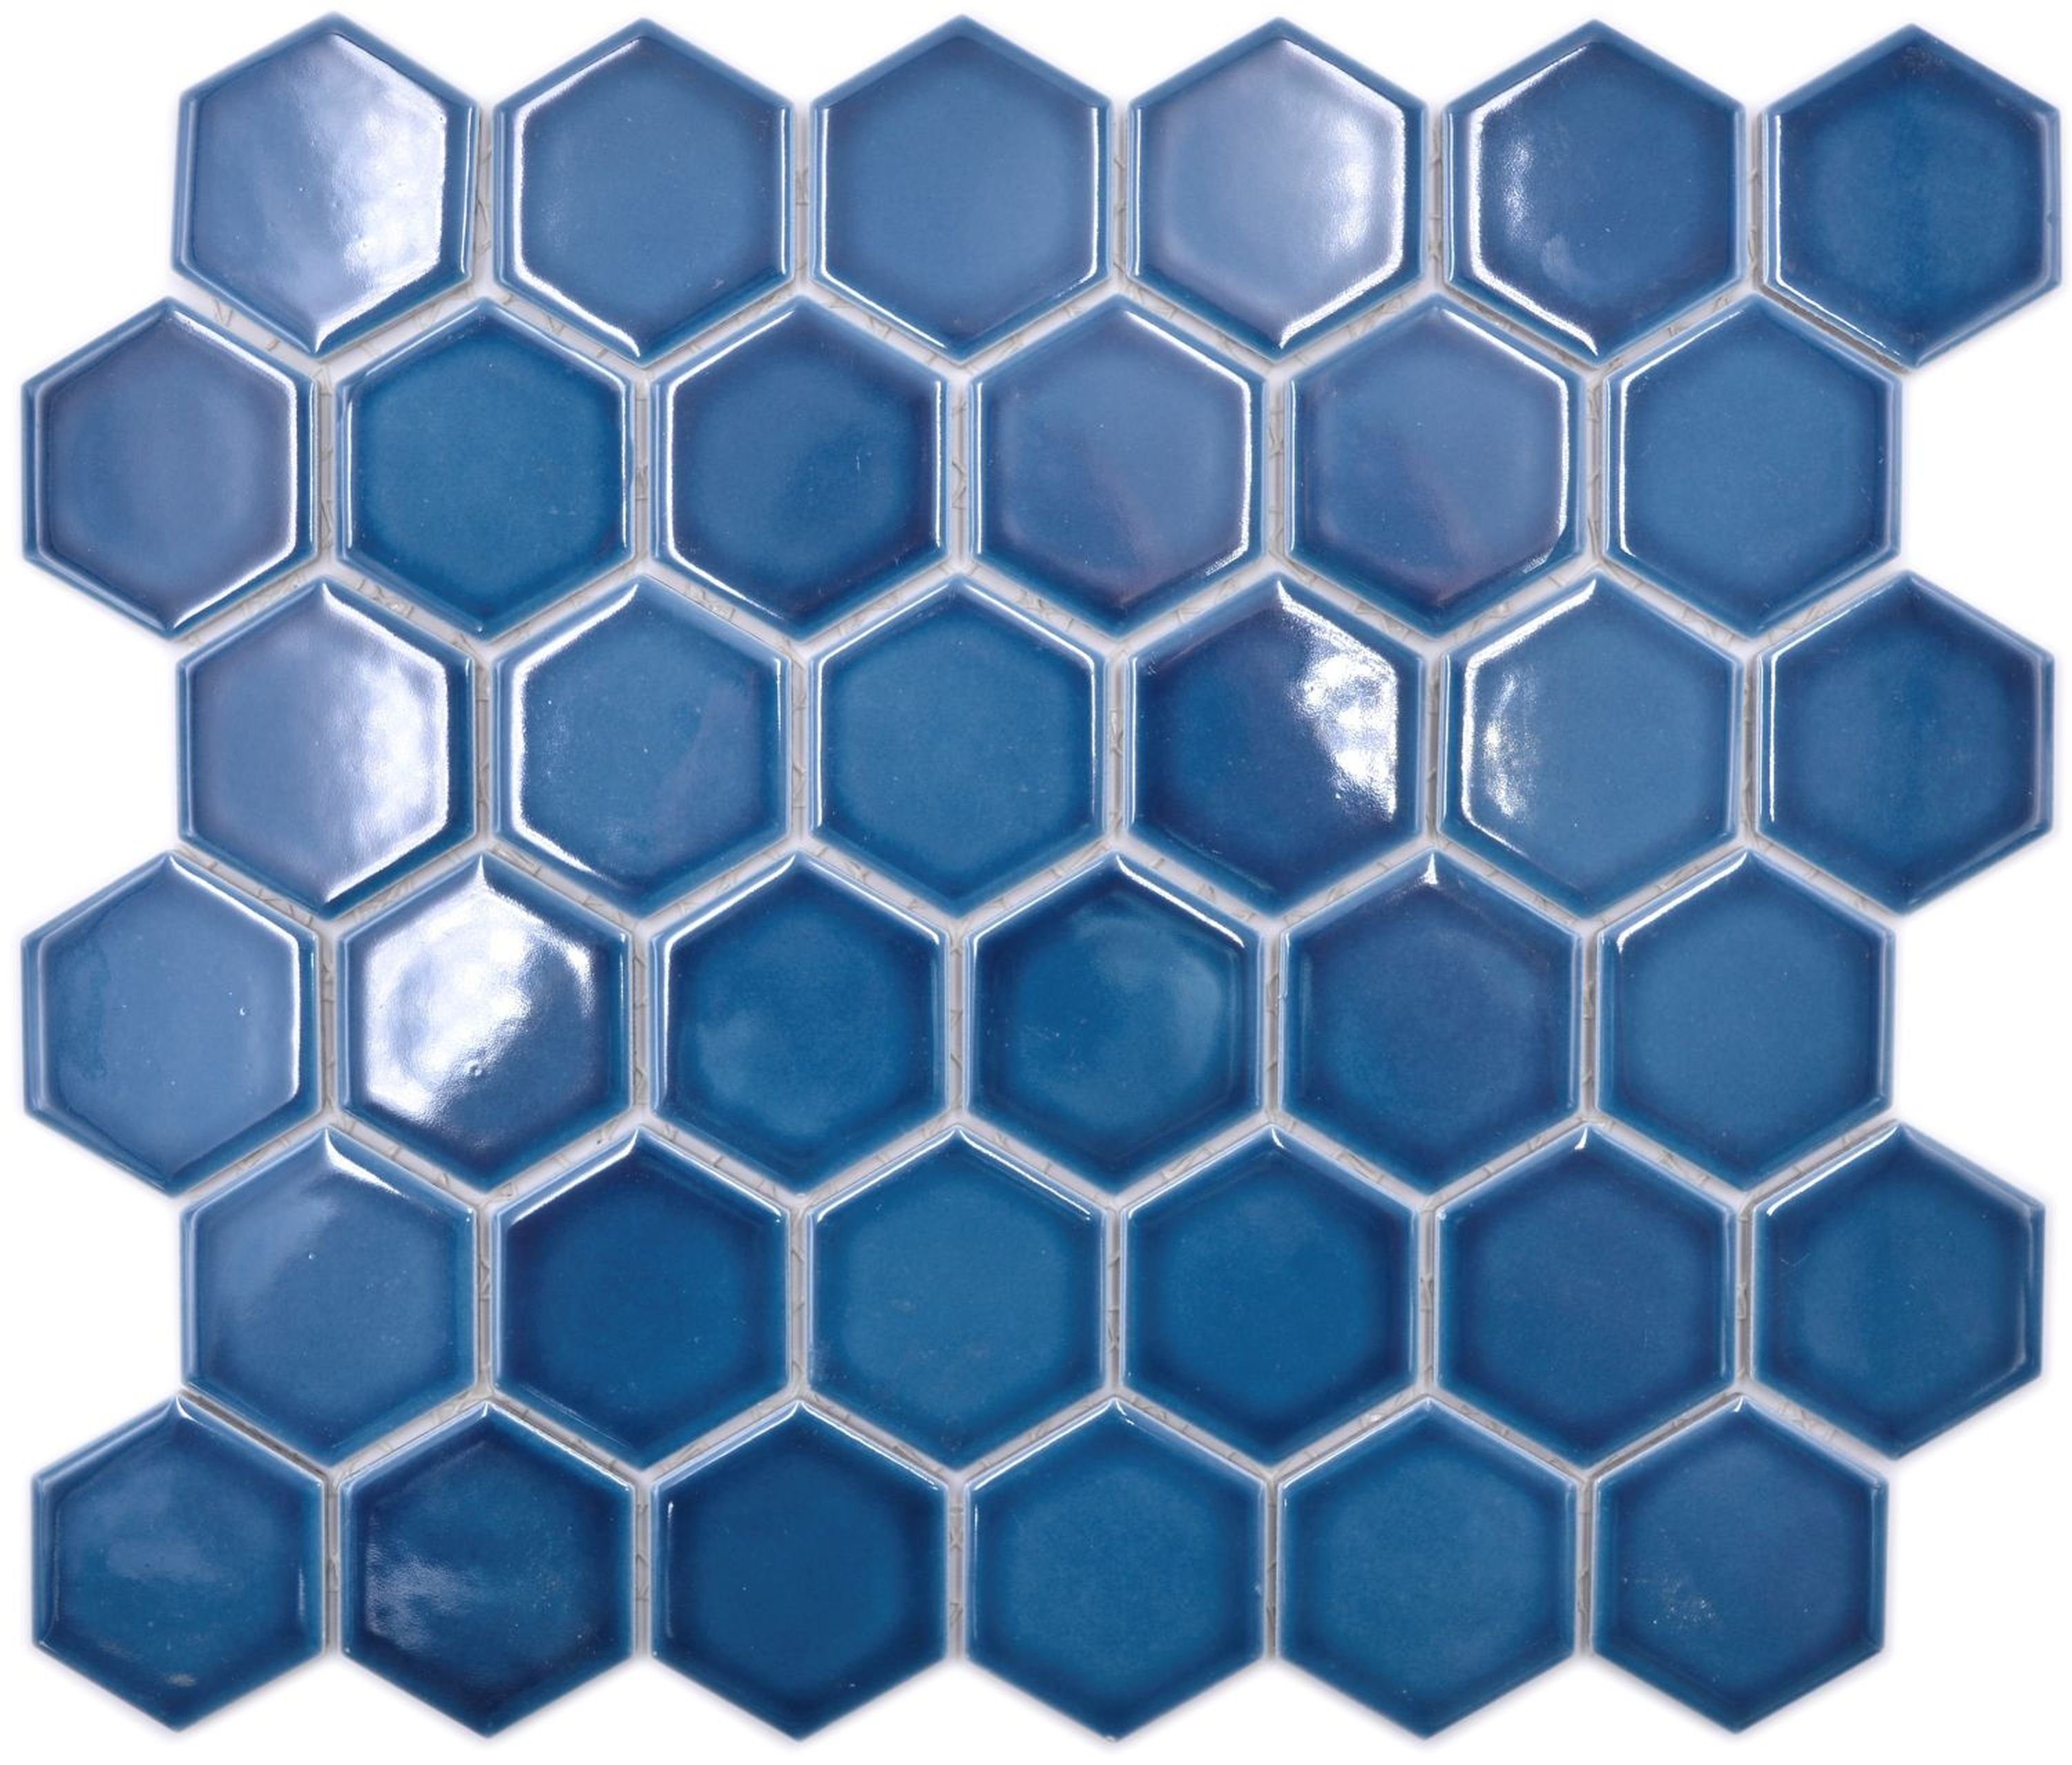 Mosani Mosaikfliesen Hexagonale Sechseck Mosaik Fliese Keramik blaugrün,  Hexagon Keramikmosaik Mosaikfliesen blaugrün glänzend